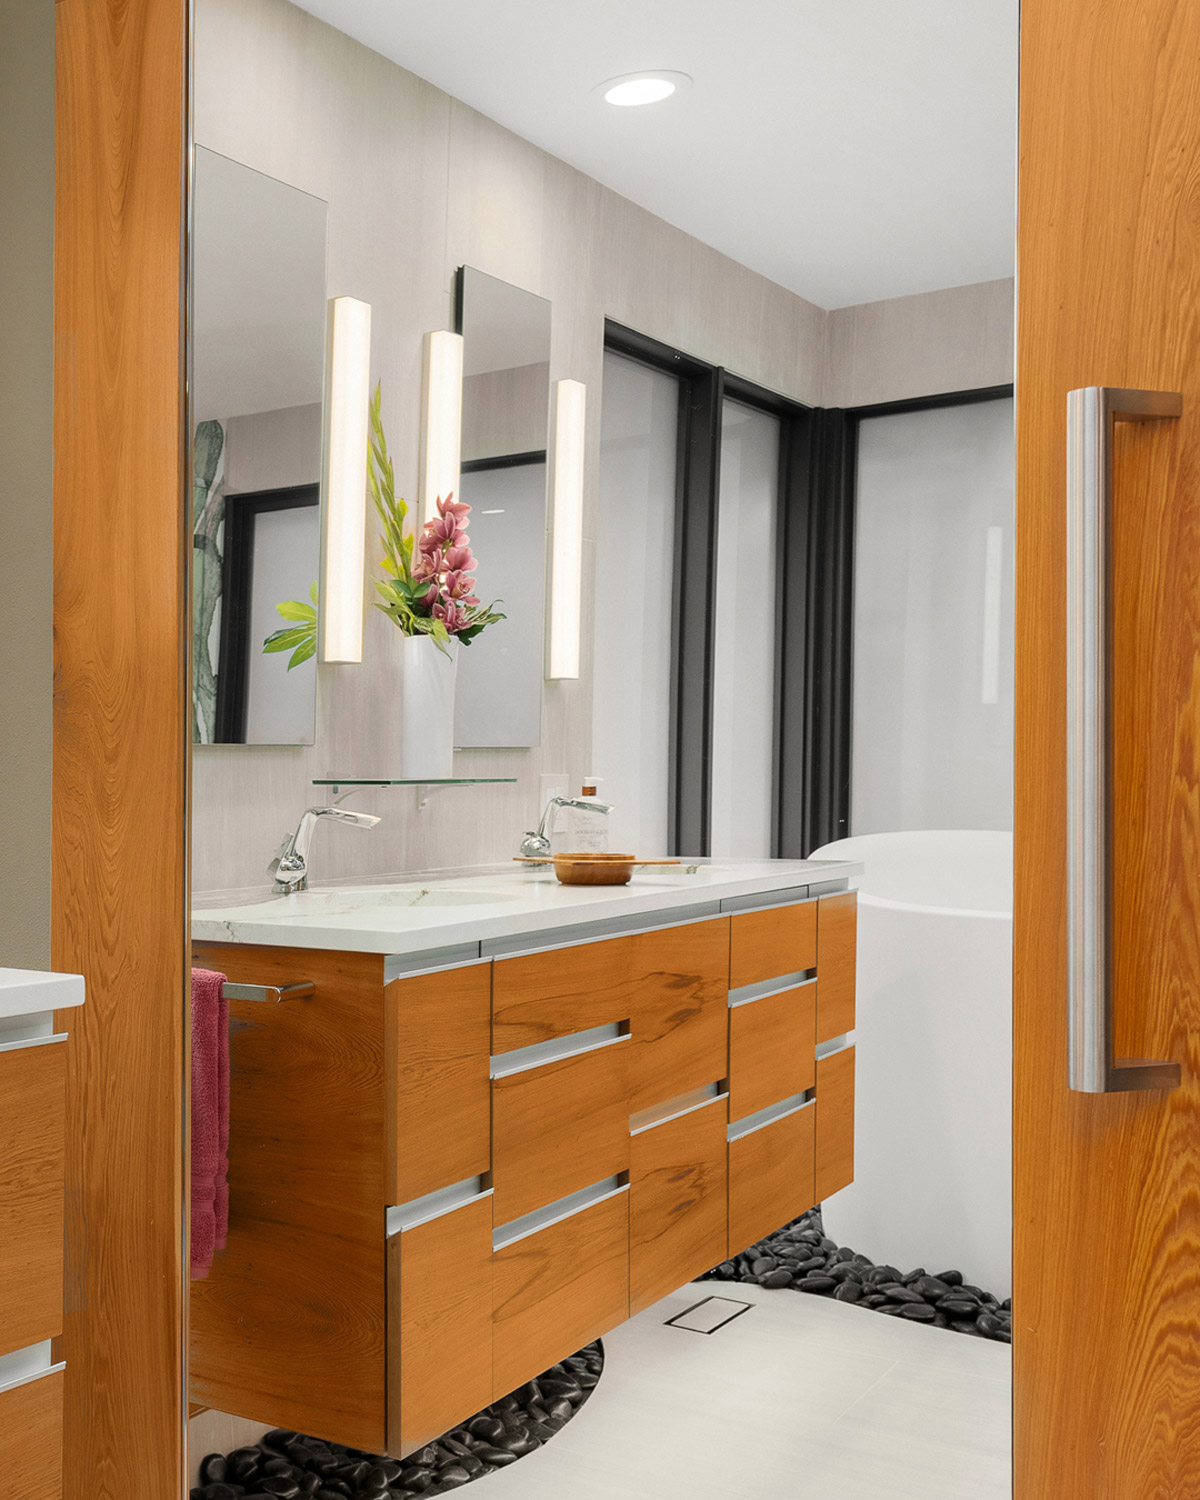 luxurious bathroom design, Light and Warm Design Creates a Luxurious Bath Oasis